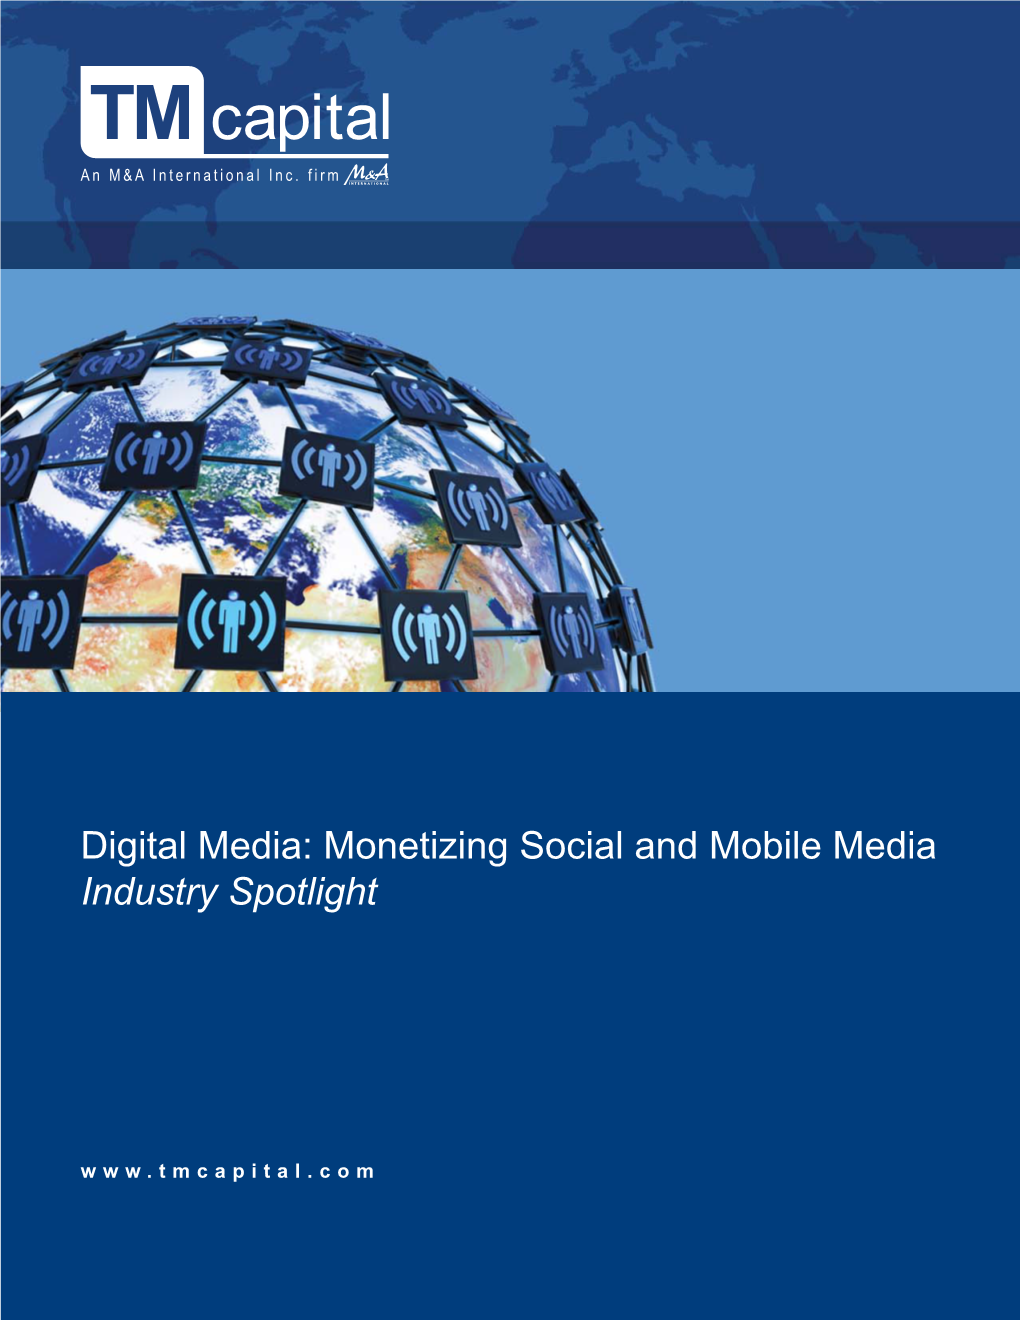 Digital Media: Monetizing Social and Mobile Media Industry Spotlight